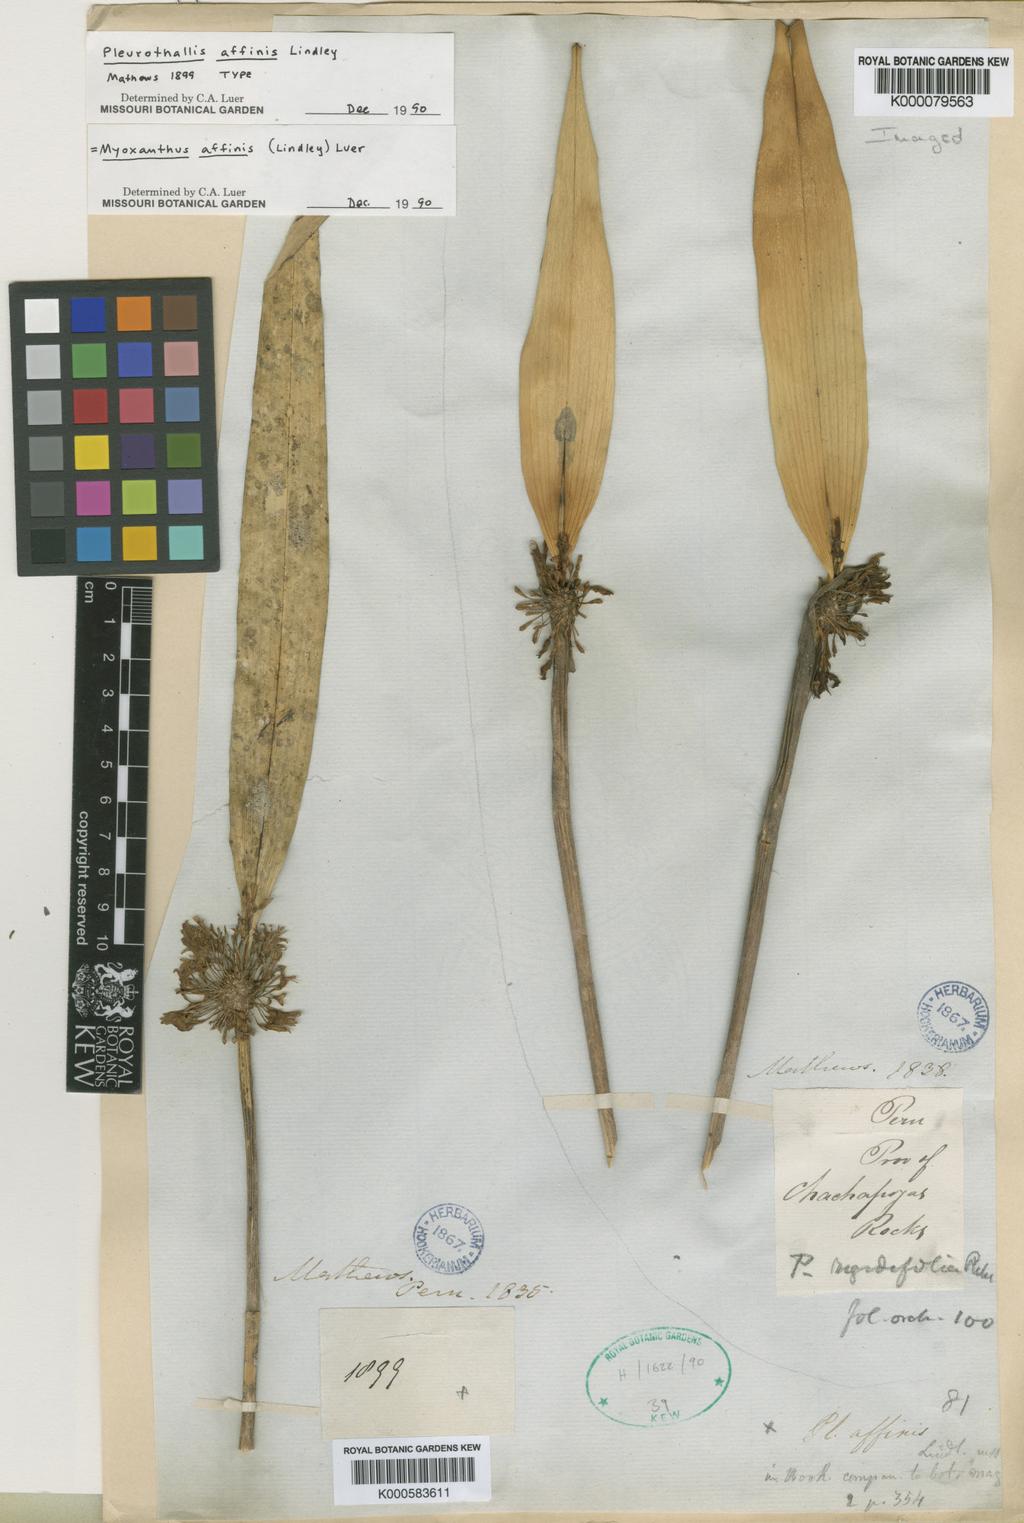 Rojas-Alvarado & Karremans Additions to Myoxanthus 205 Figure 1. Holotype of Pleurothallis affinis Lindl.